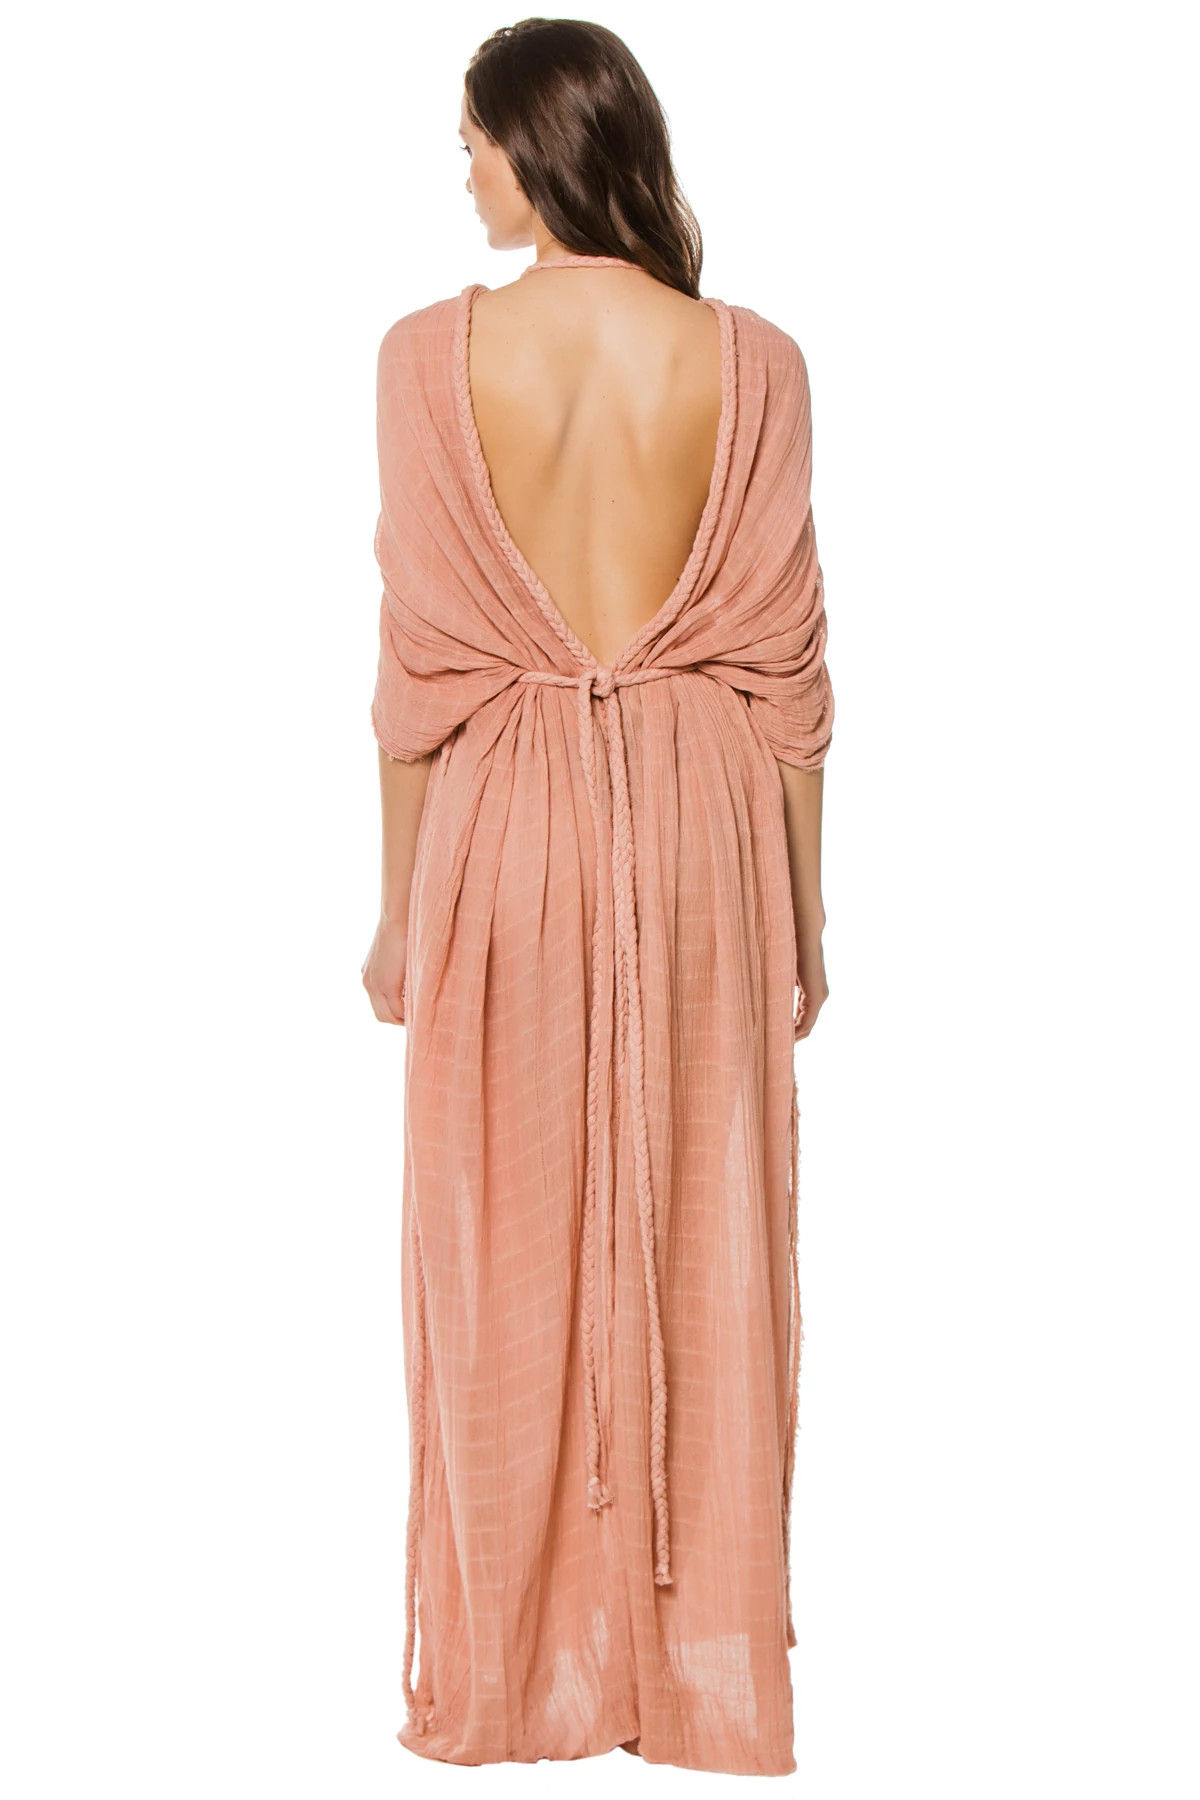 Athena Full Length Goddess Gown image number 2